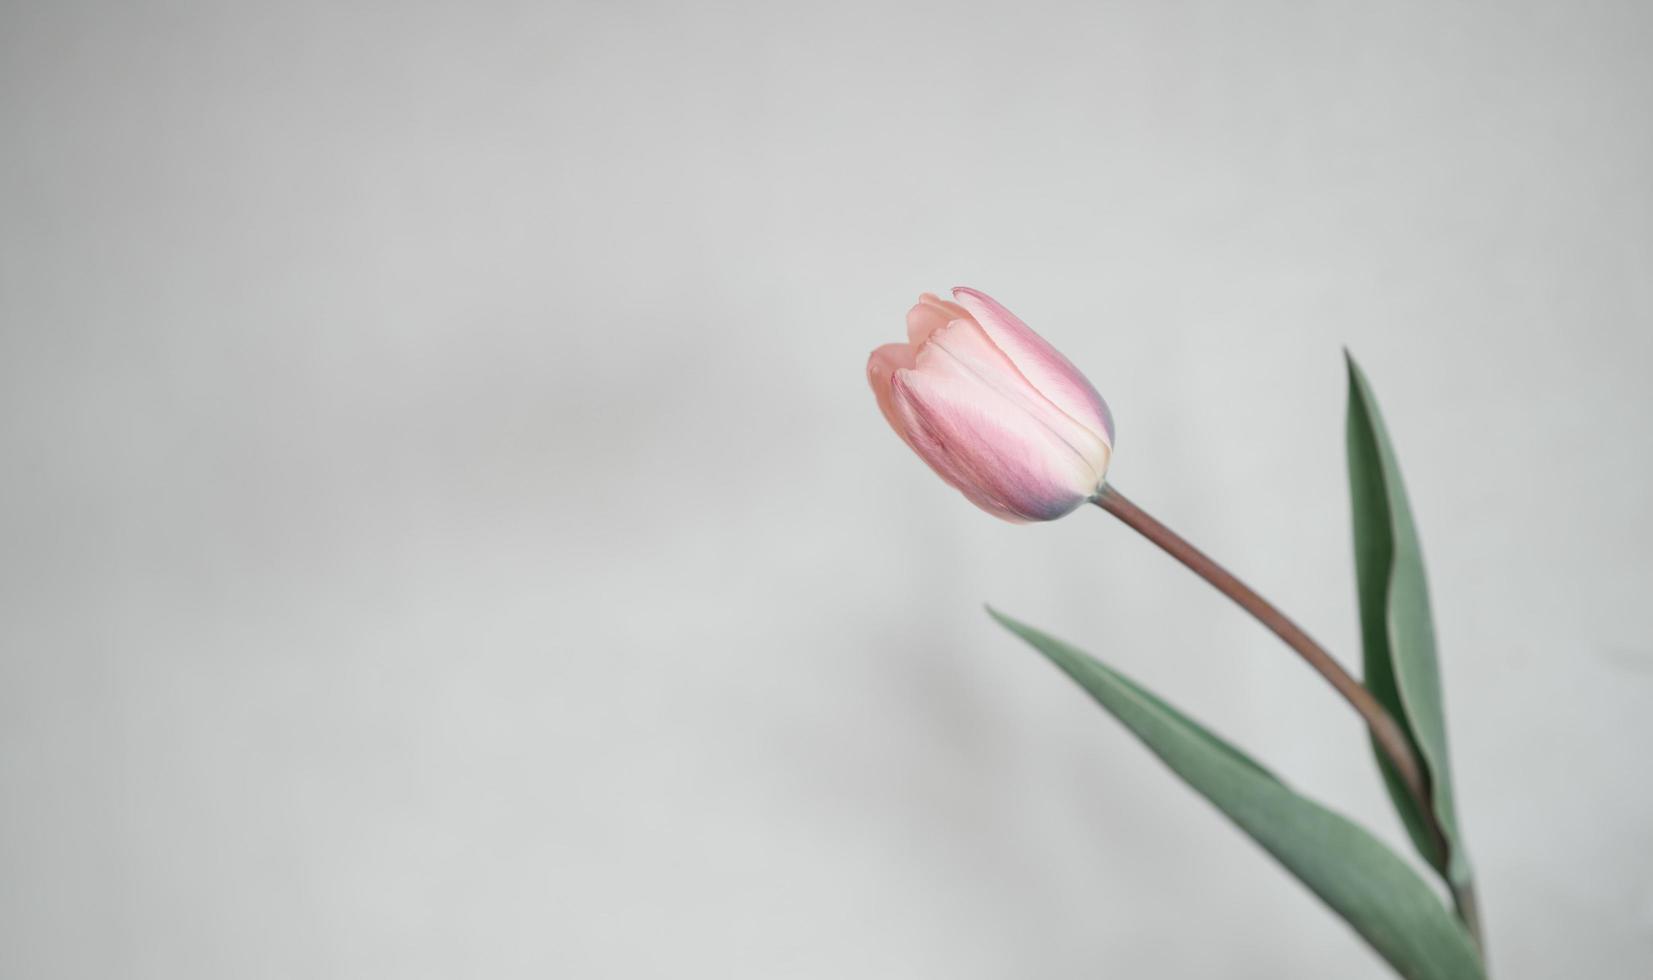 Tulip flower against grey background photo